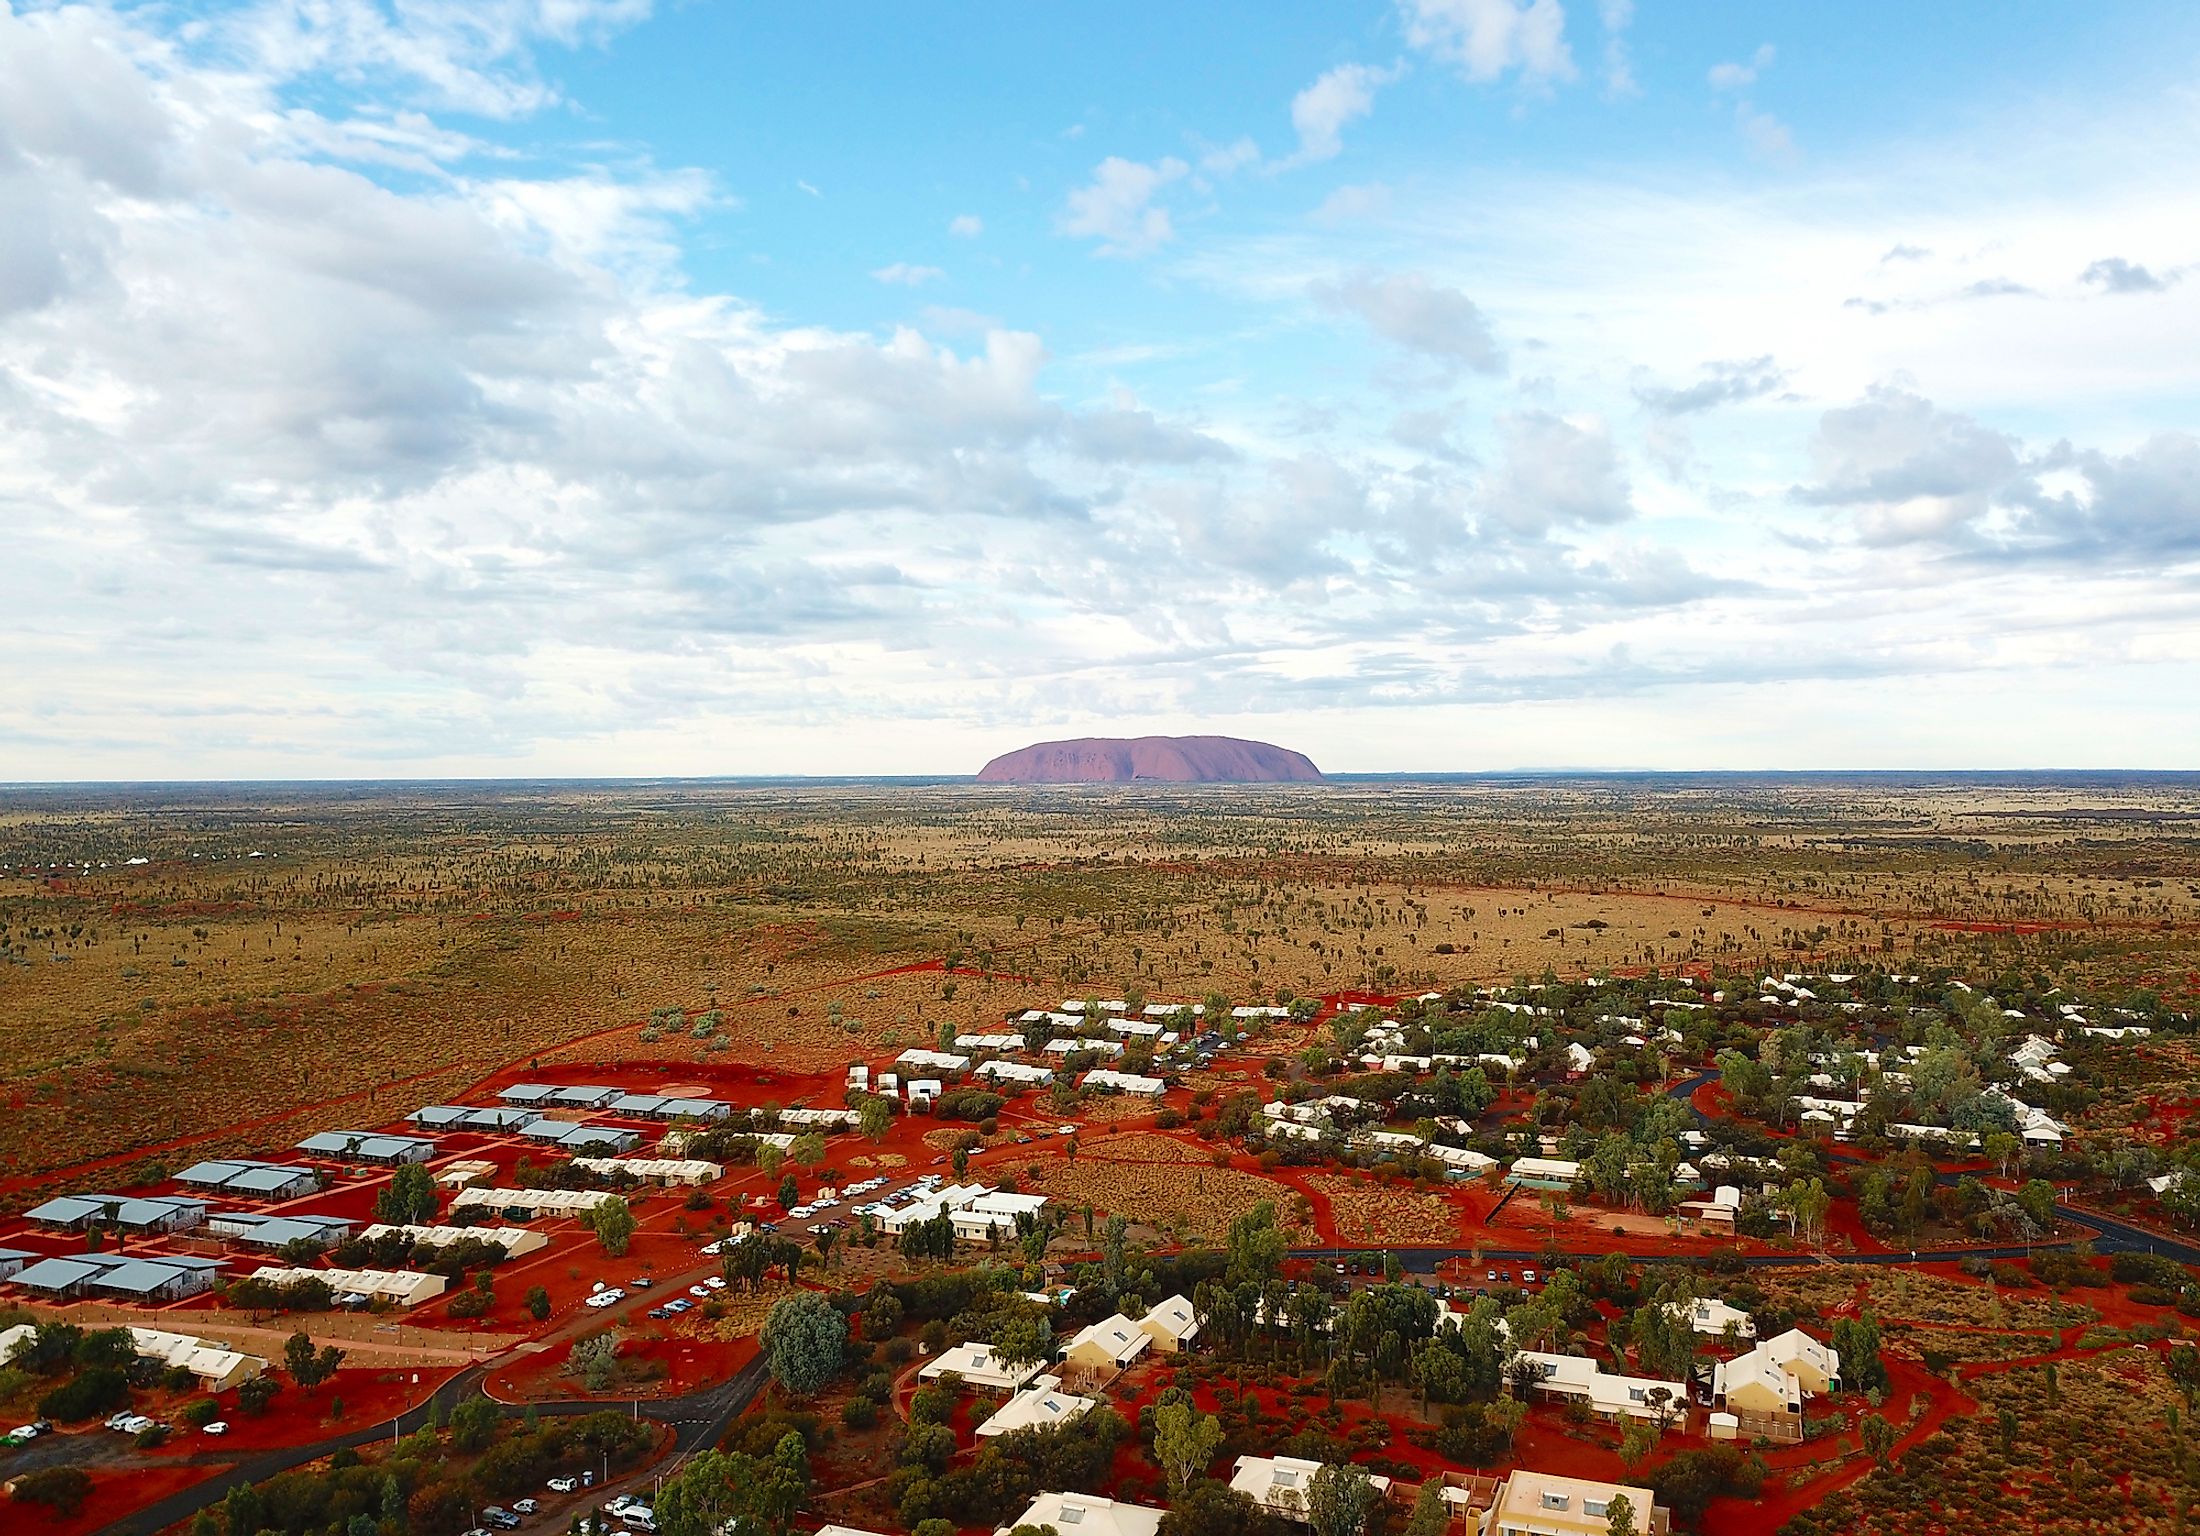 Panoramic landscape of Uluru (Ayers Rock) from Yulara in the Northern Territory state of Australia. Editorial credit: katacarix / Shutterstock.com